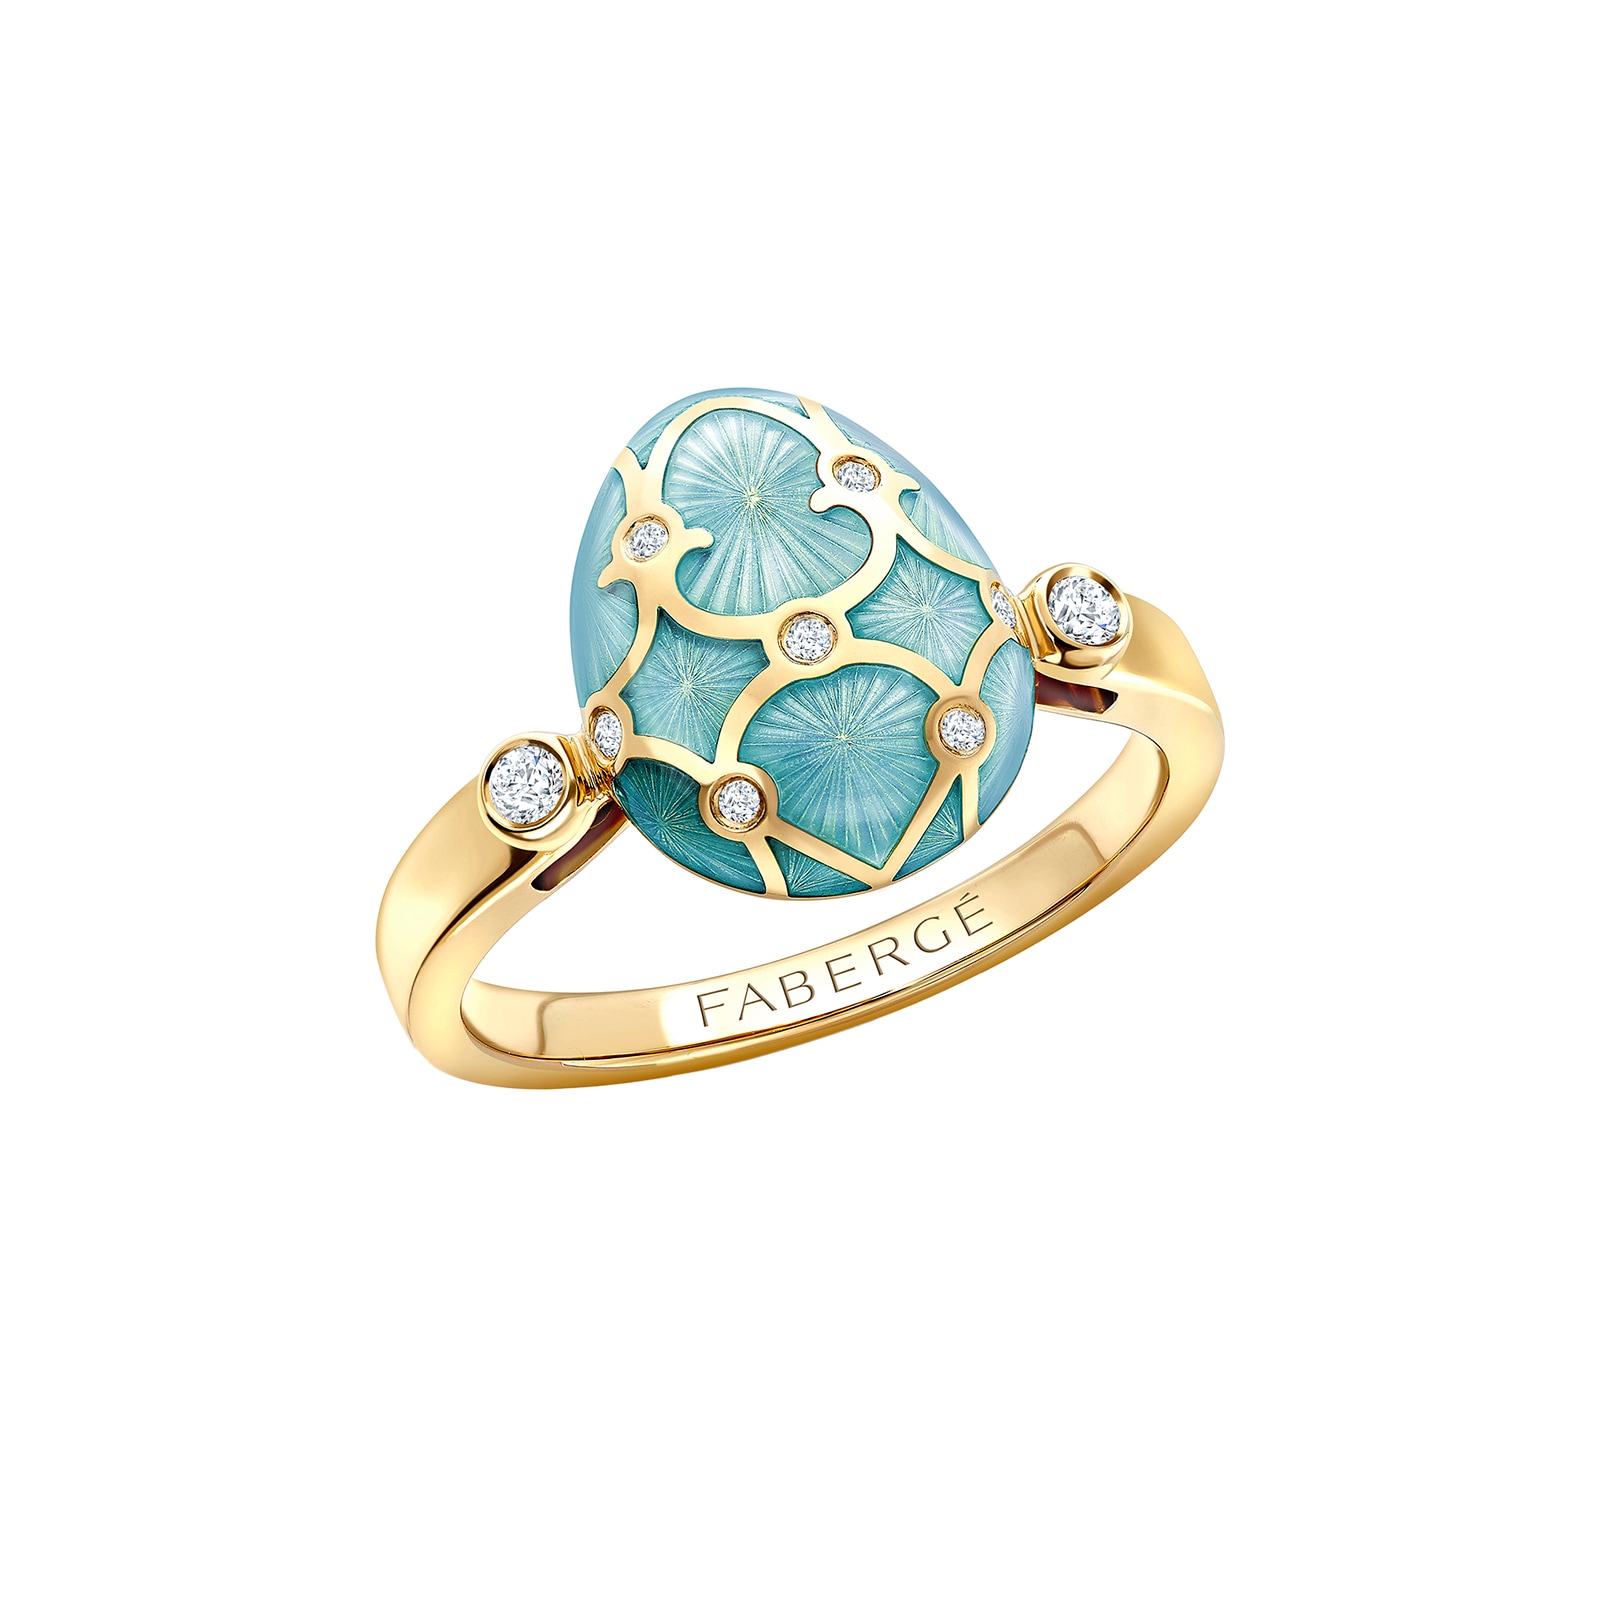 Heritage 18ct Yellow Gold Diamond & Tourquoise Enamel Egg Ring - Ring Size M